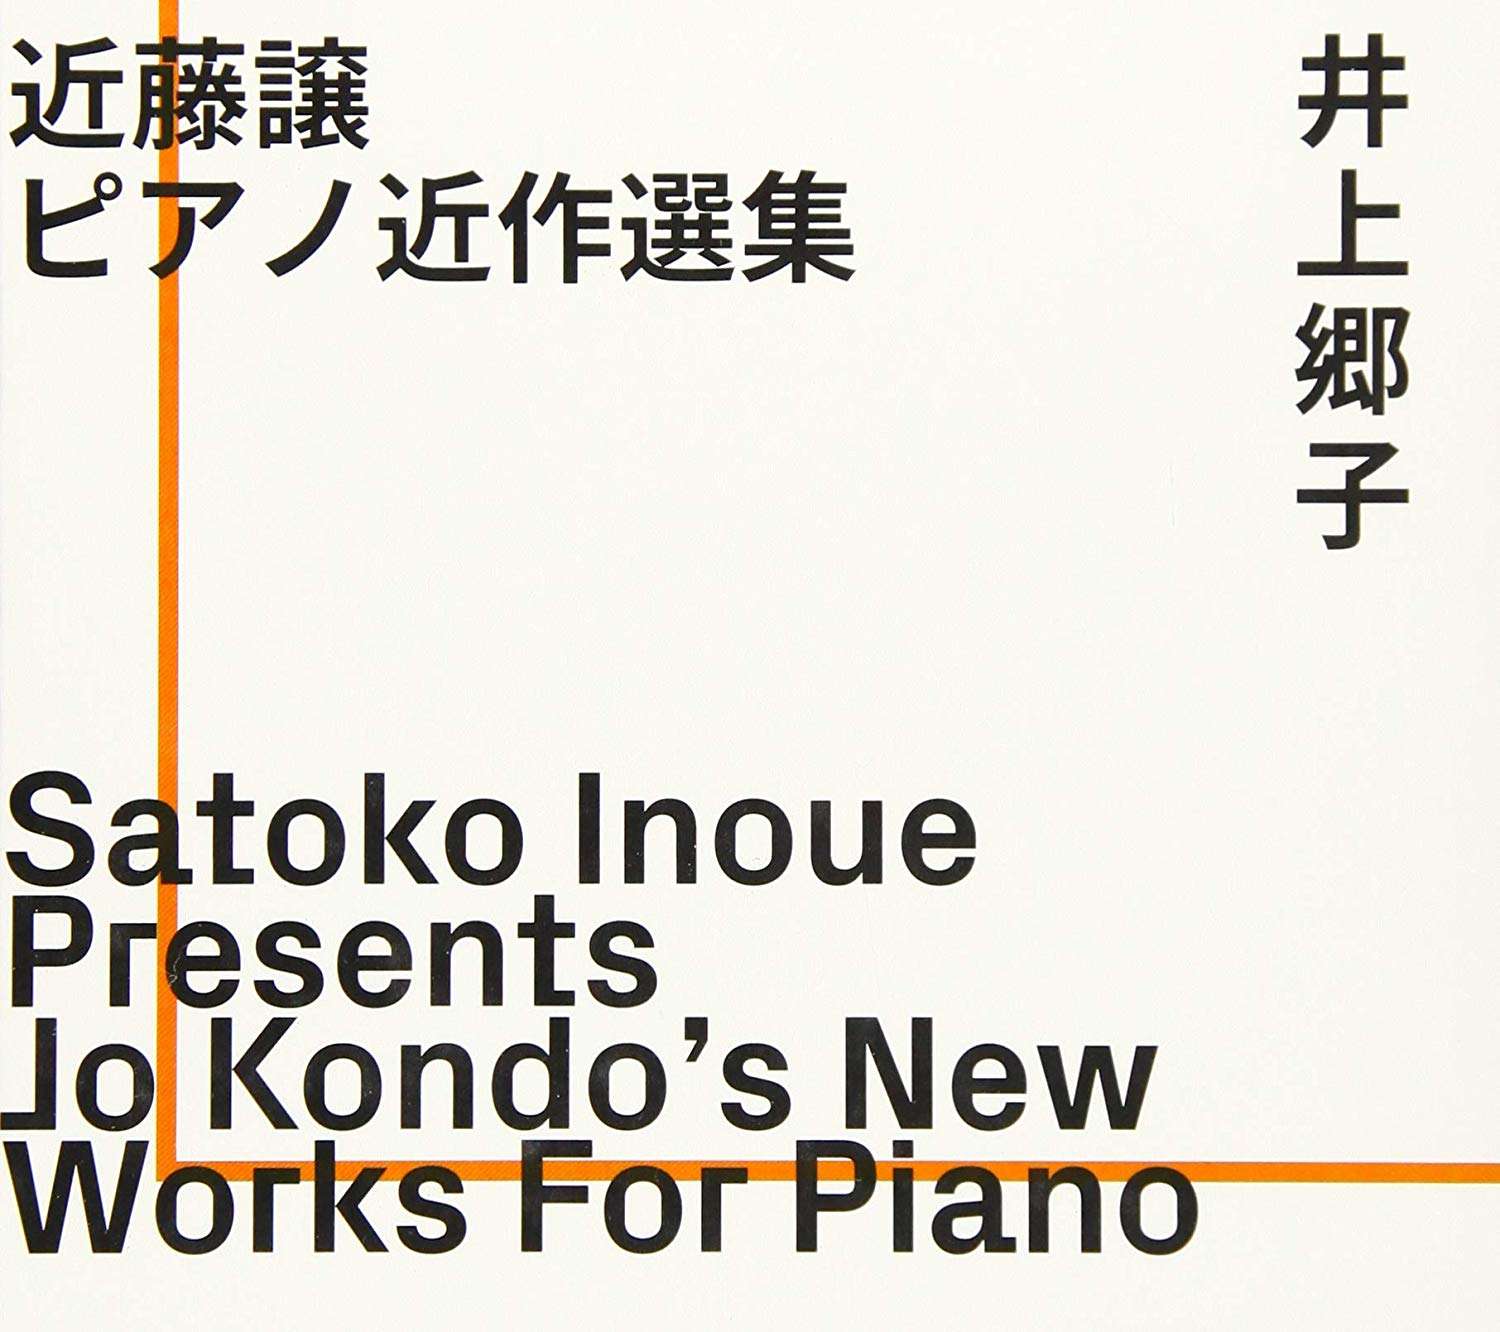 Kondo: New Works For Piano